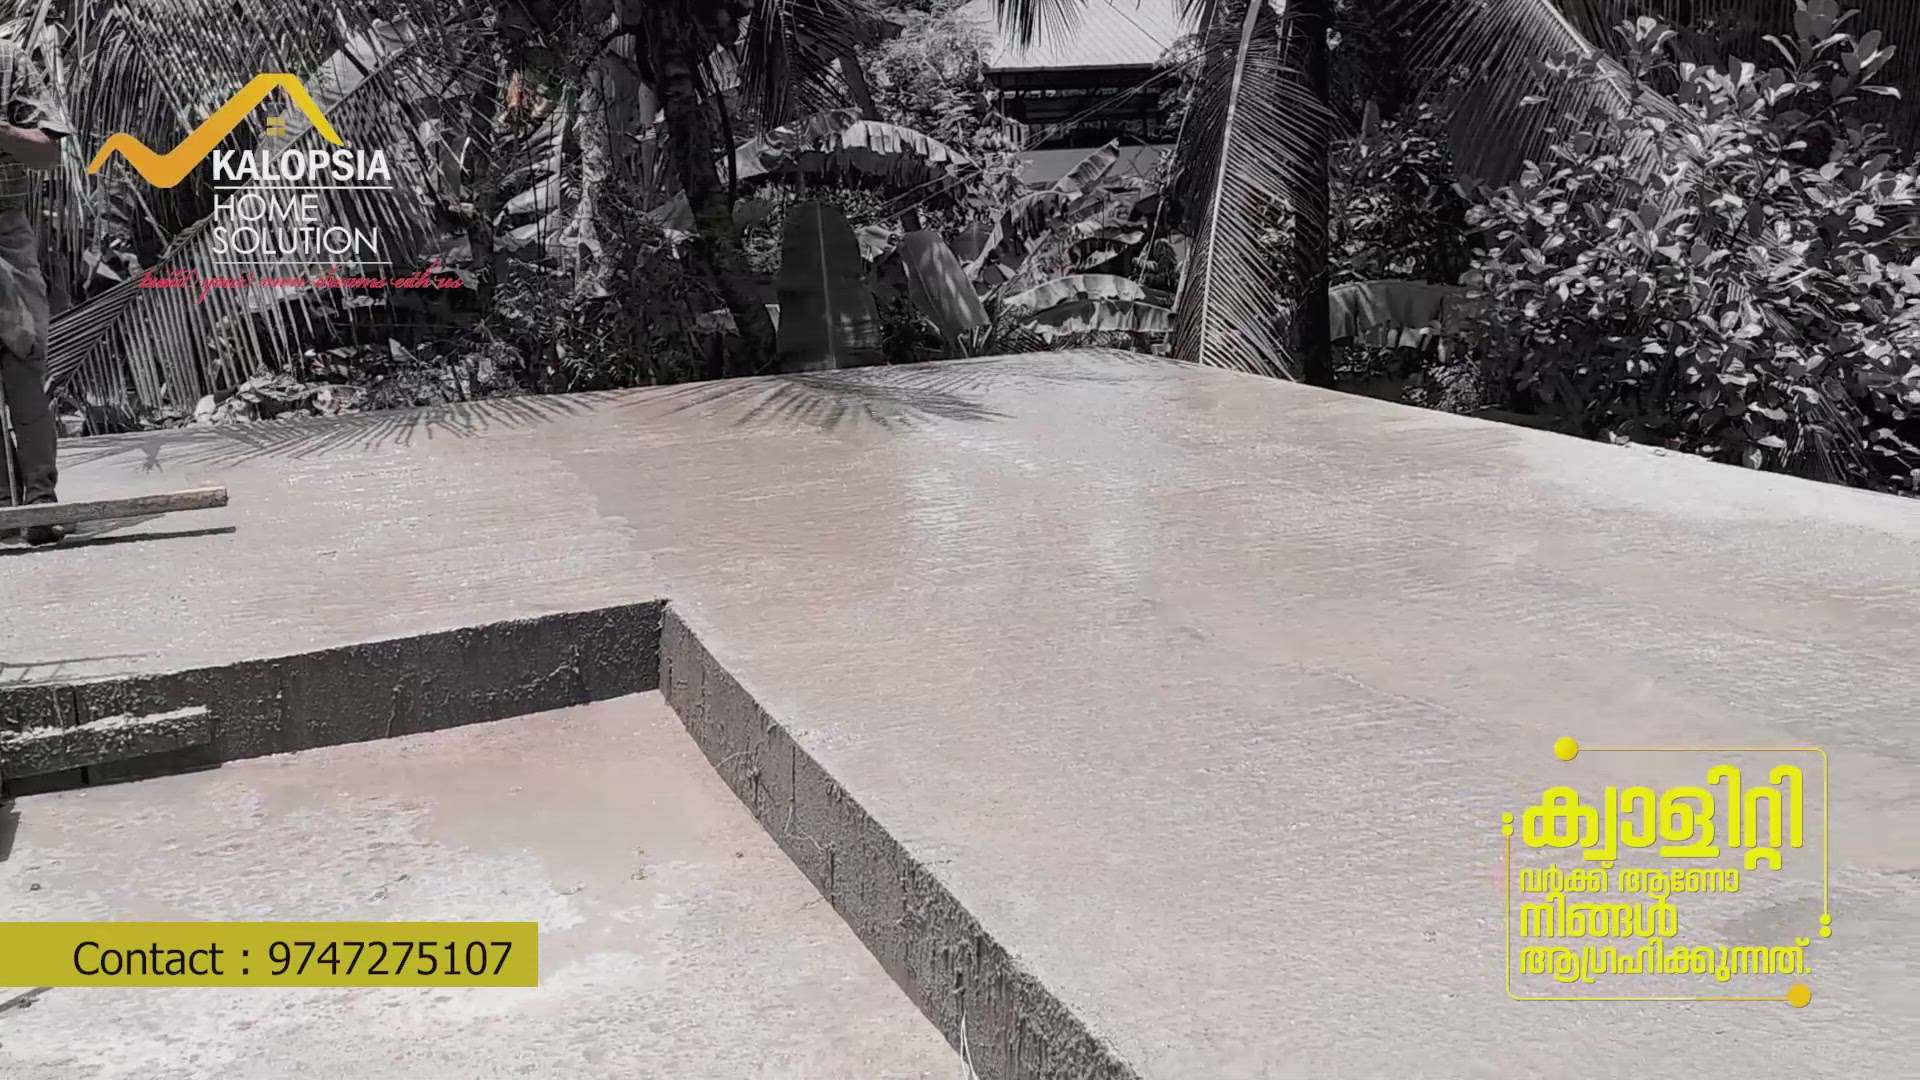 #concreting
#kalopsia home solution